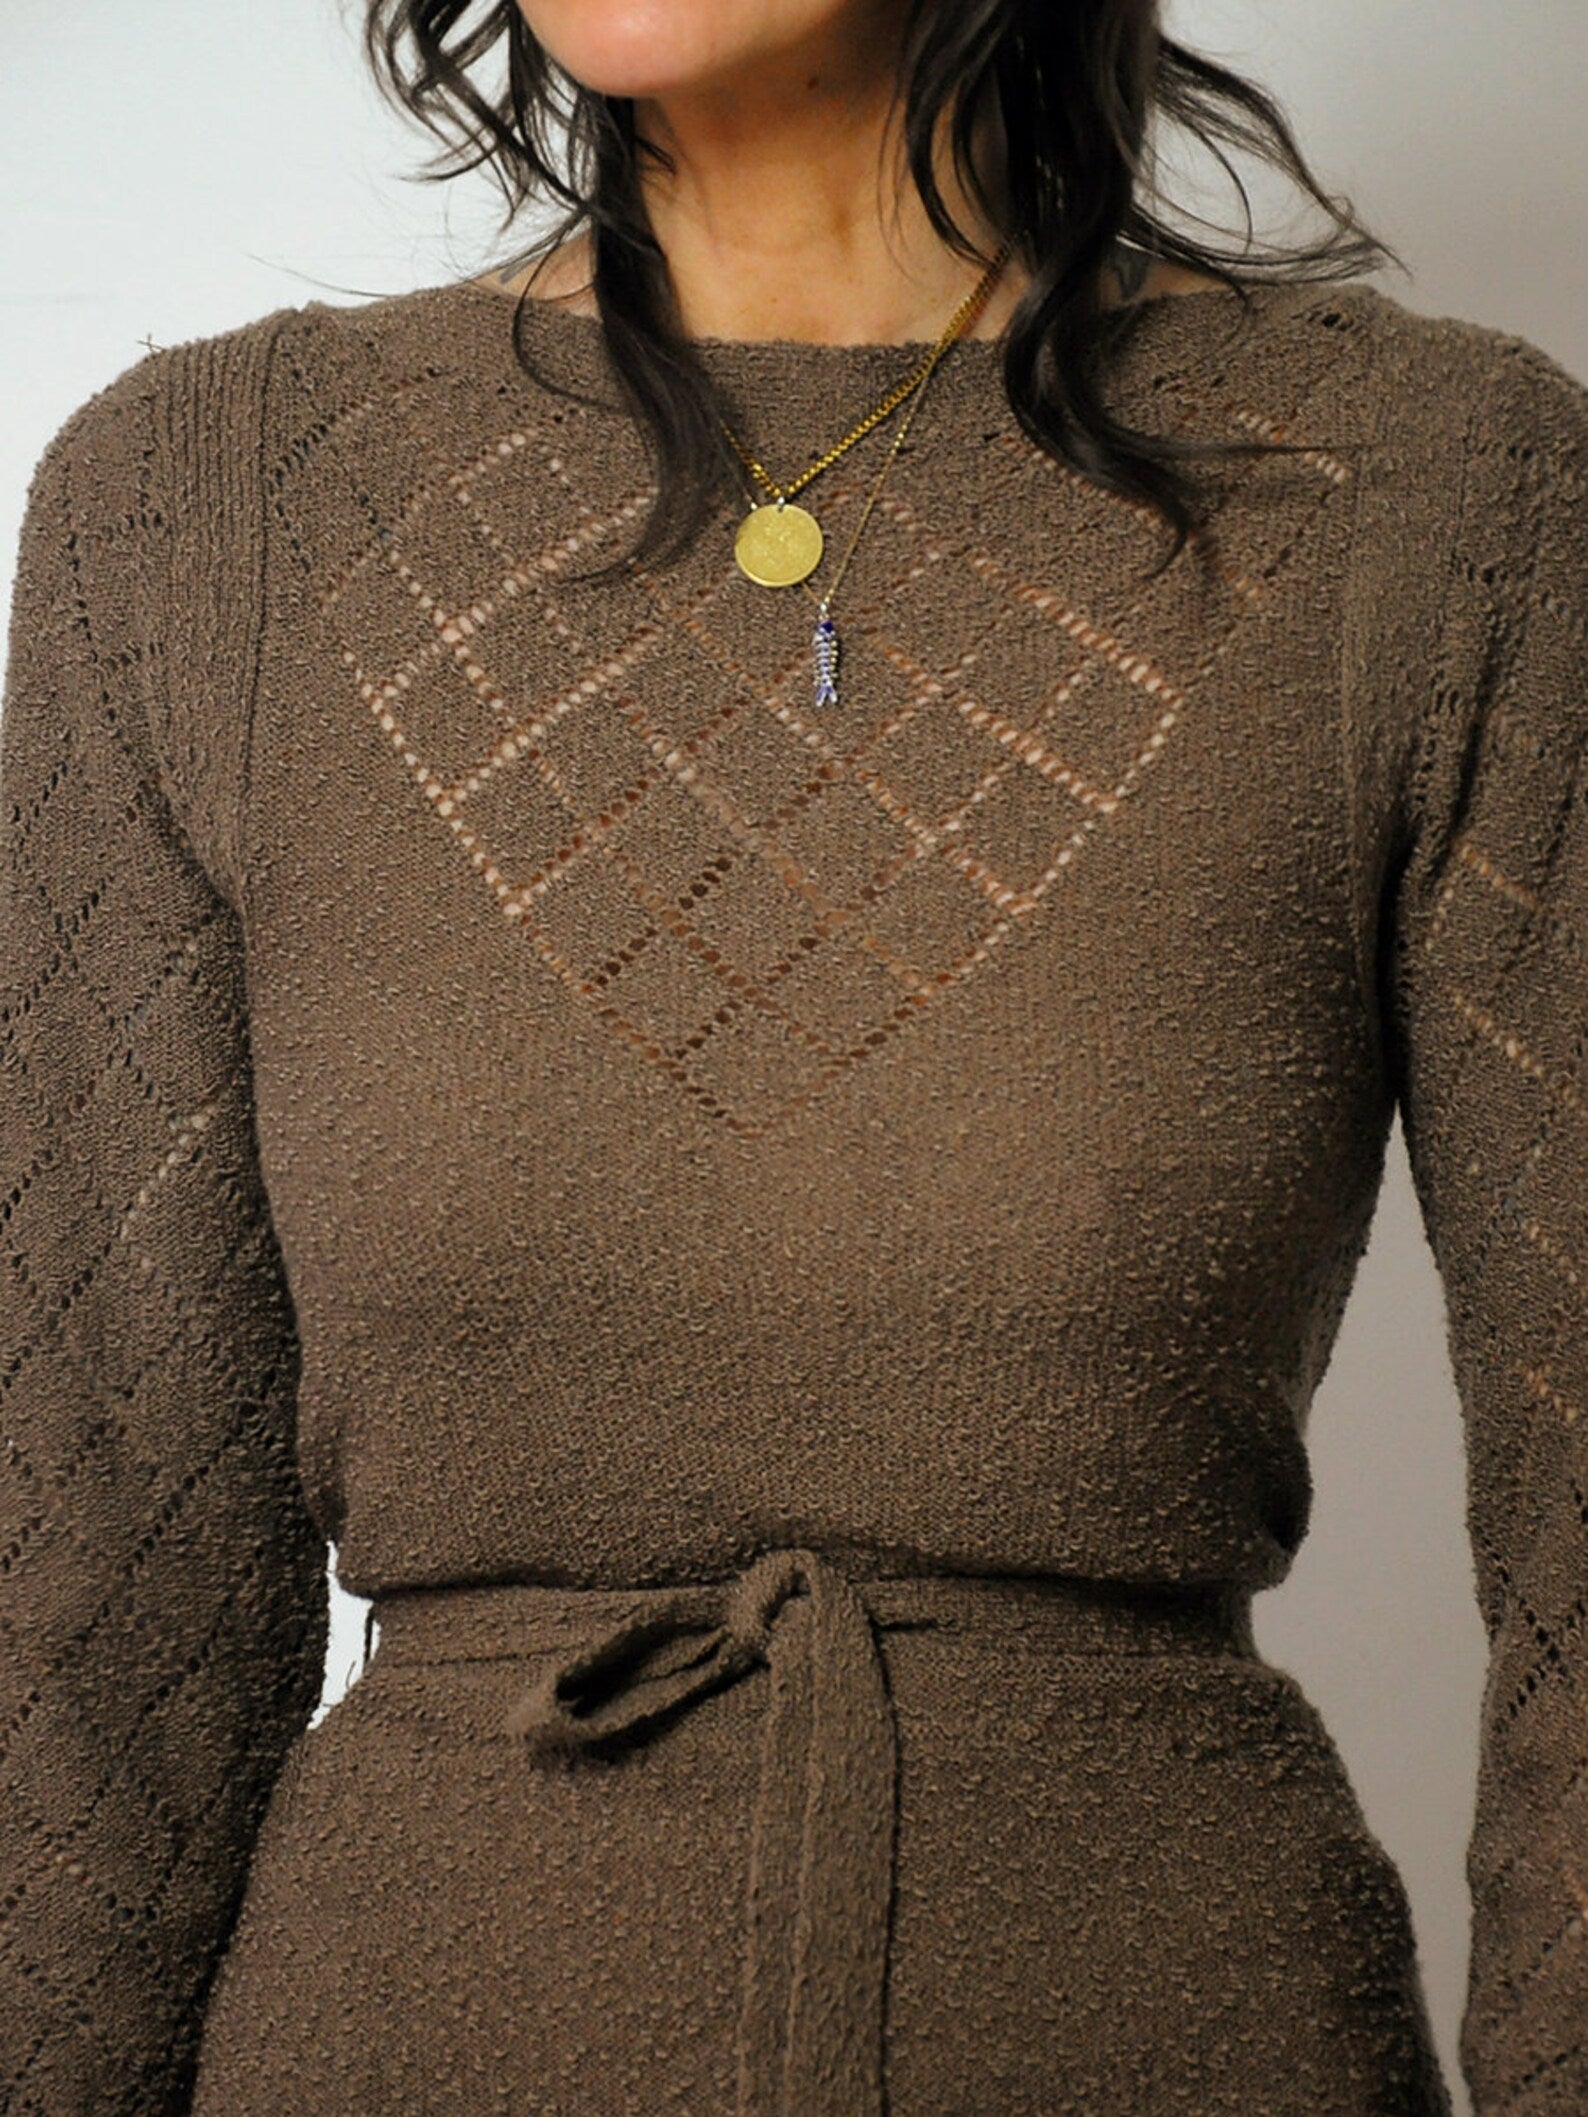 1970's Athena Pointelle Knit Dress